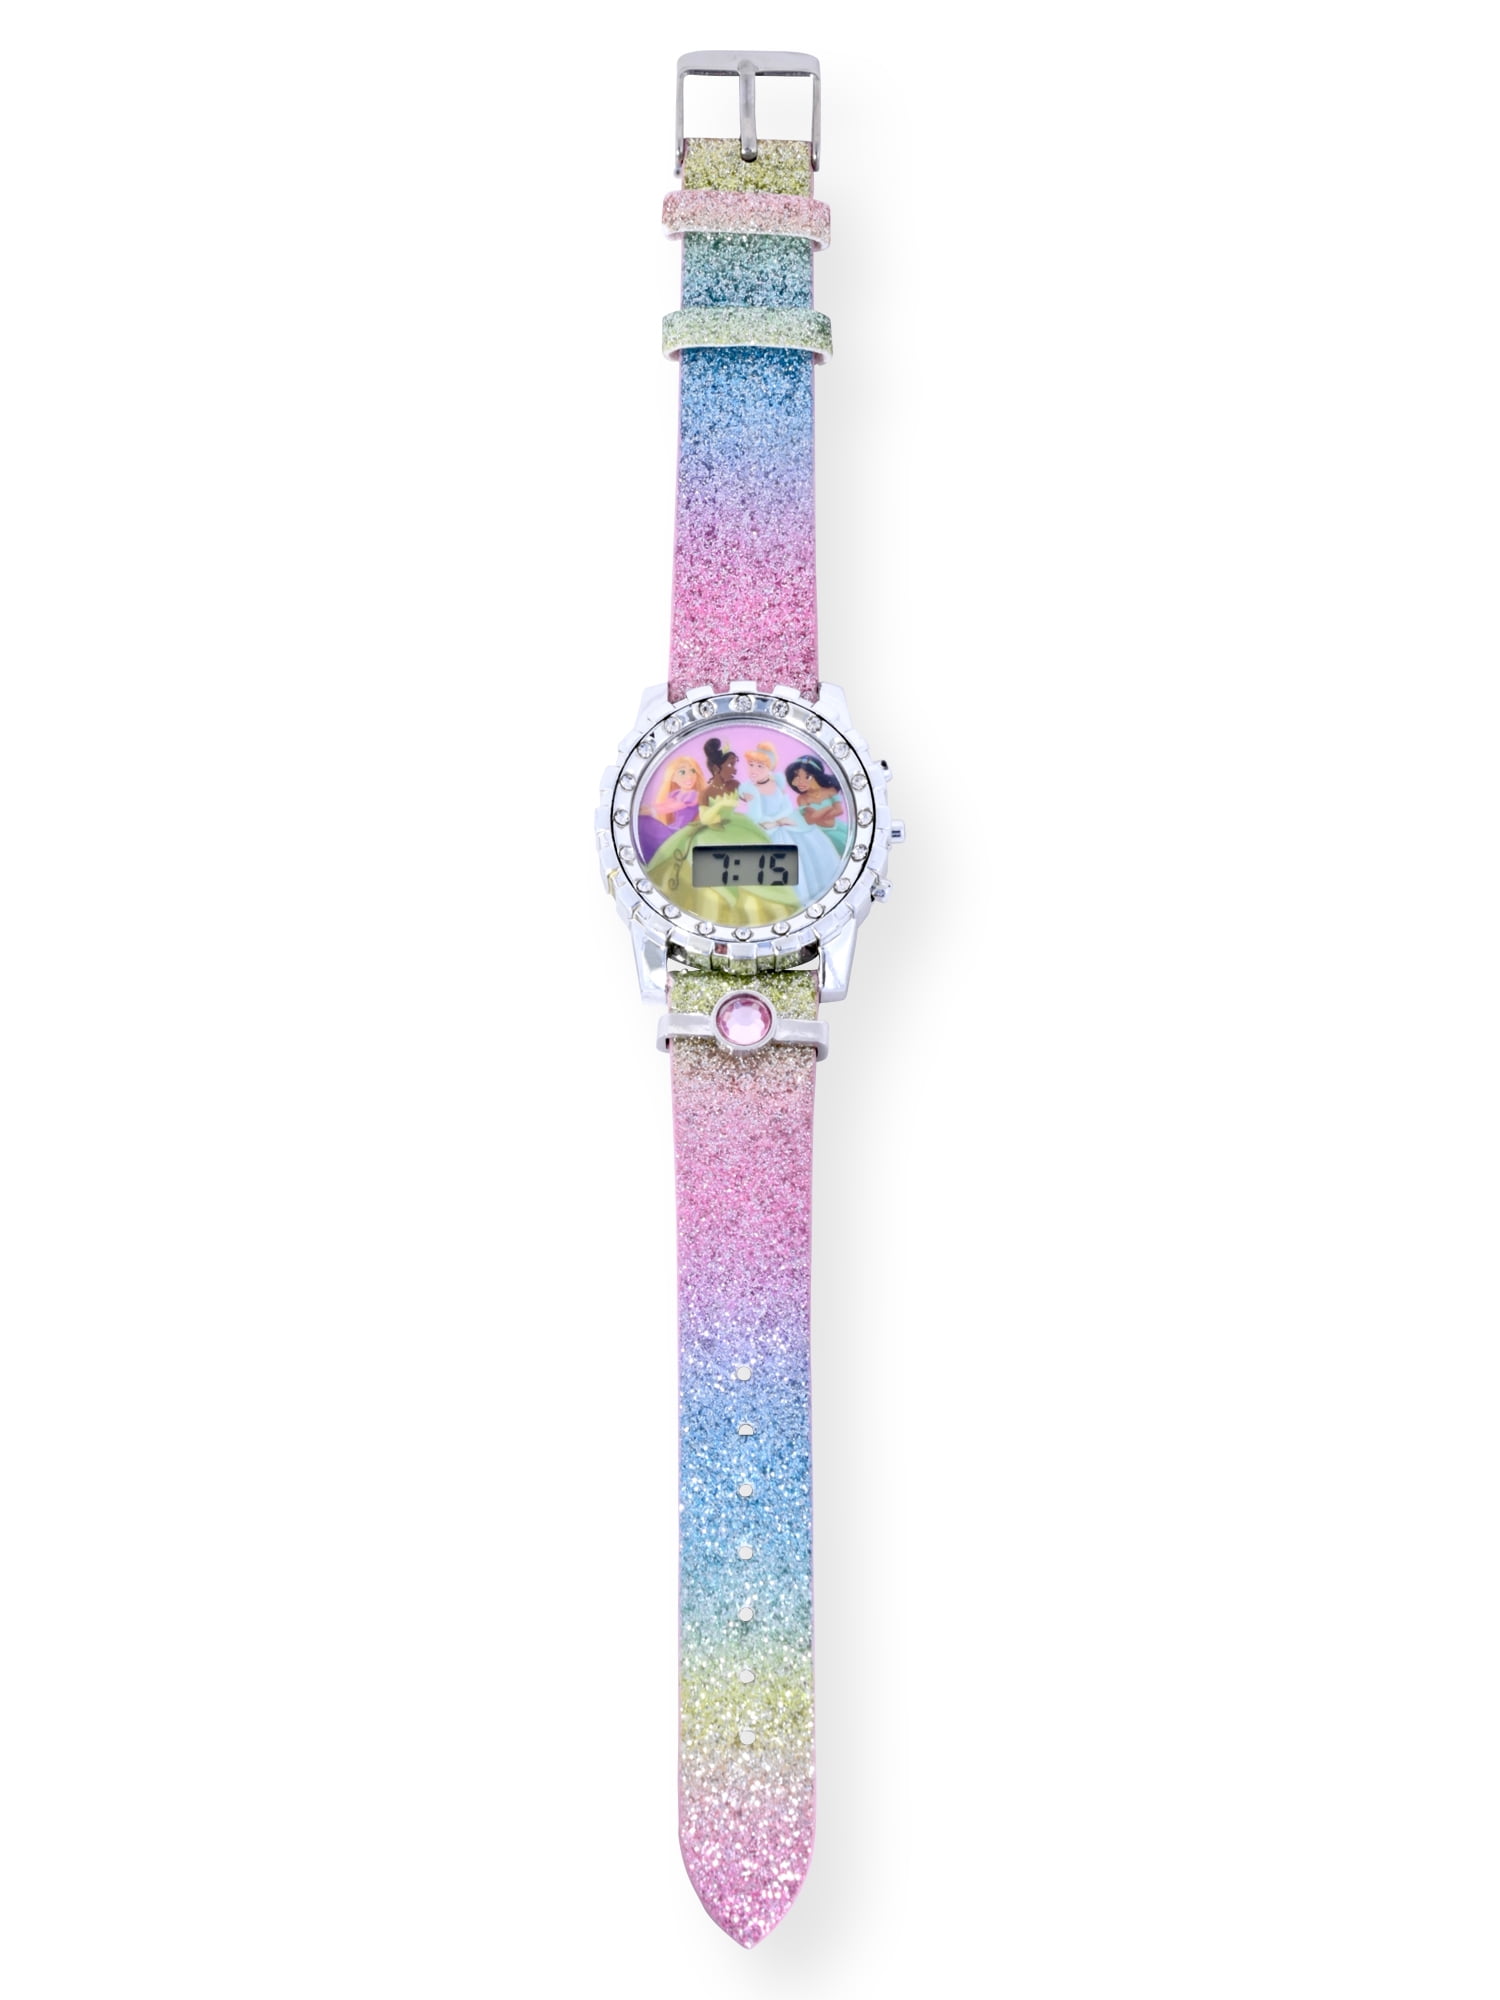 Disney Princess Flashing Unisex Child LCD Watch with Pink Stone - PN4432WM